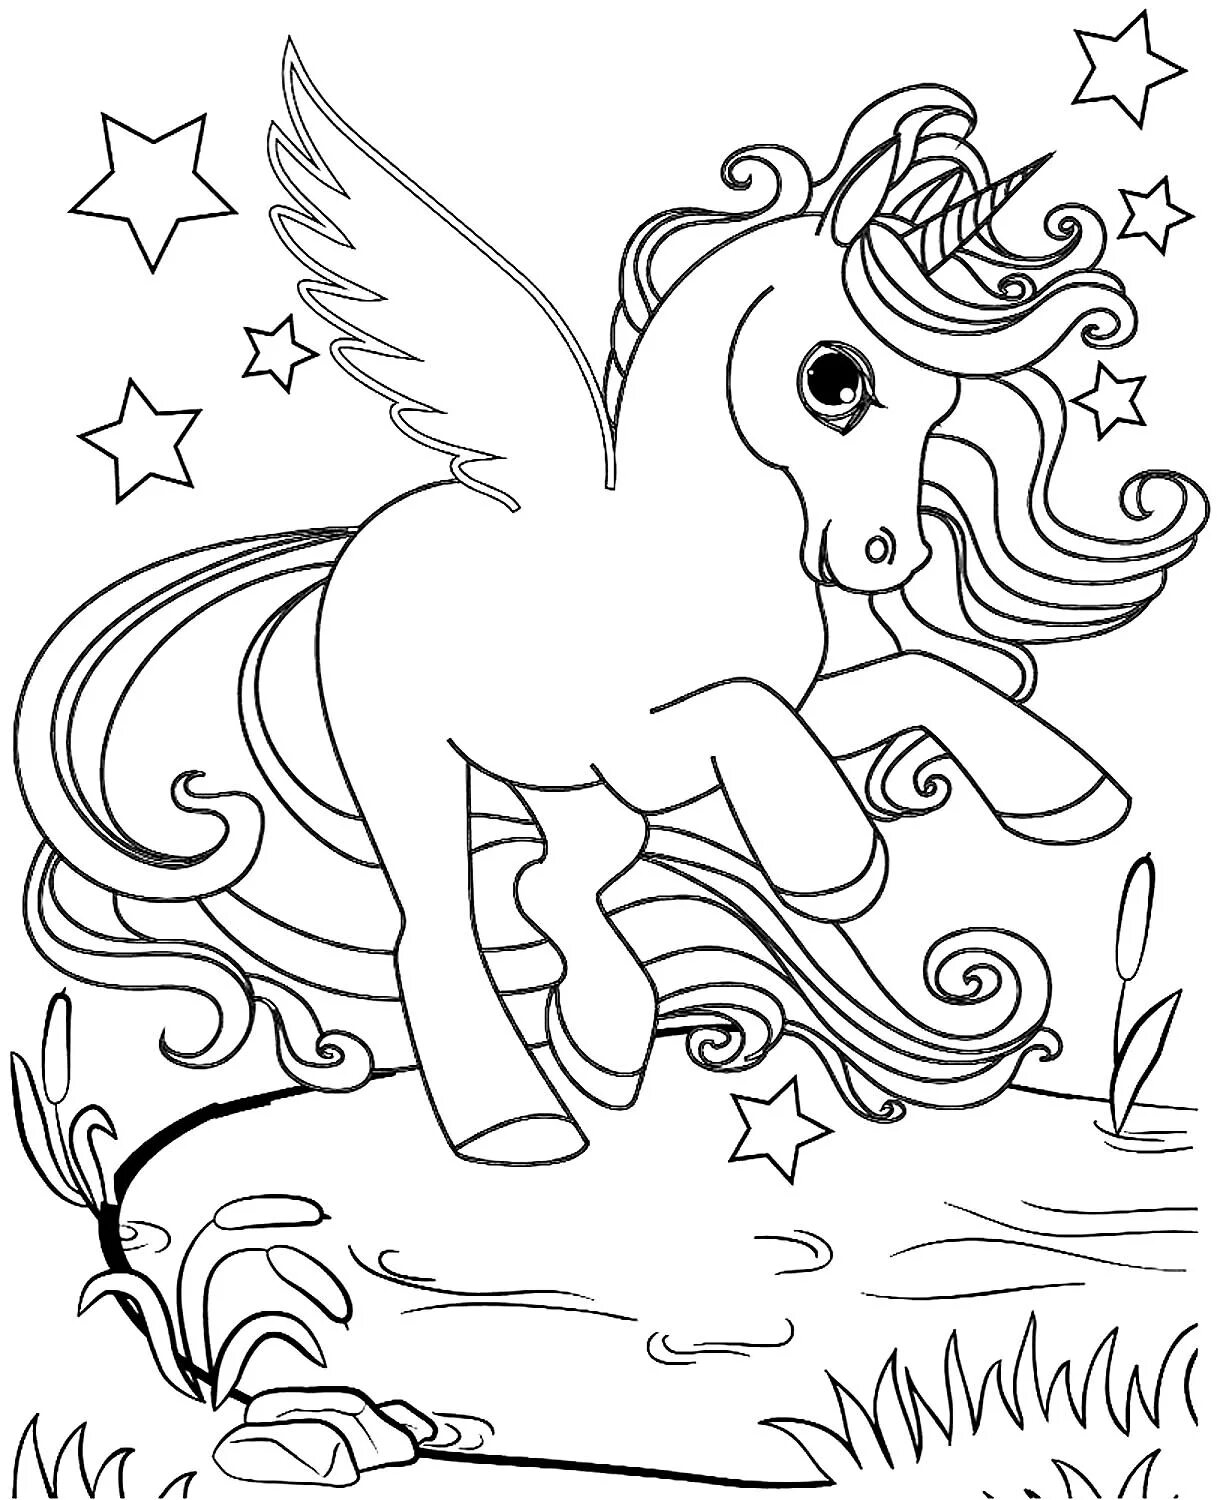 Humorous coloring book turn on the unicorns